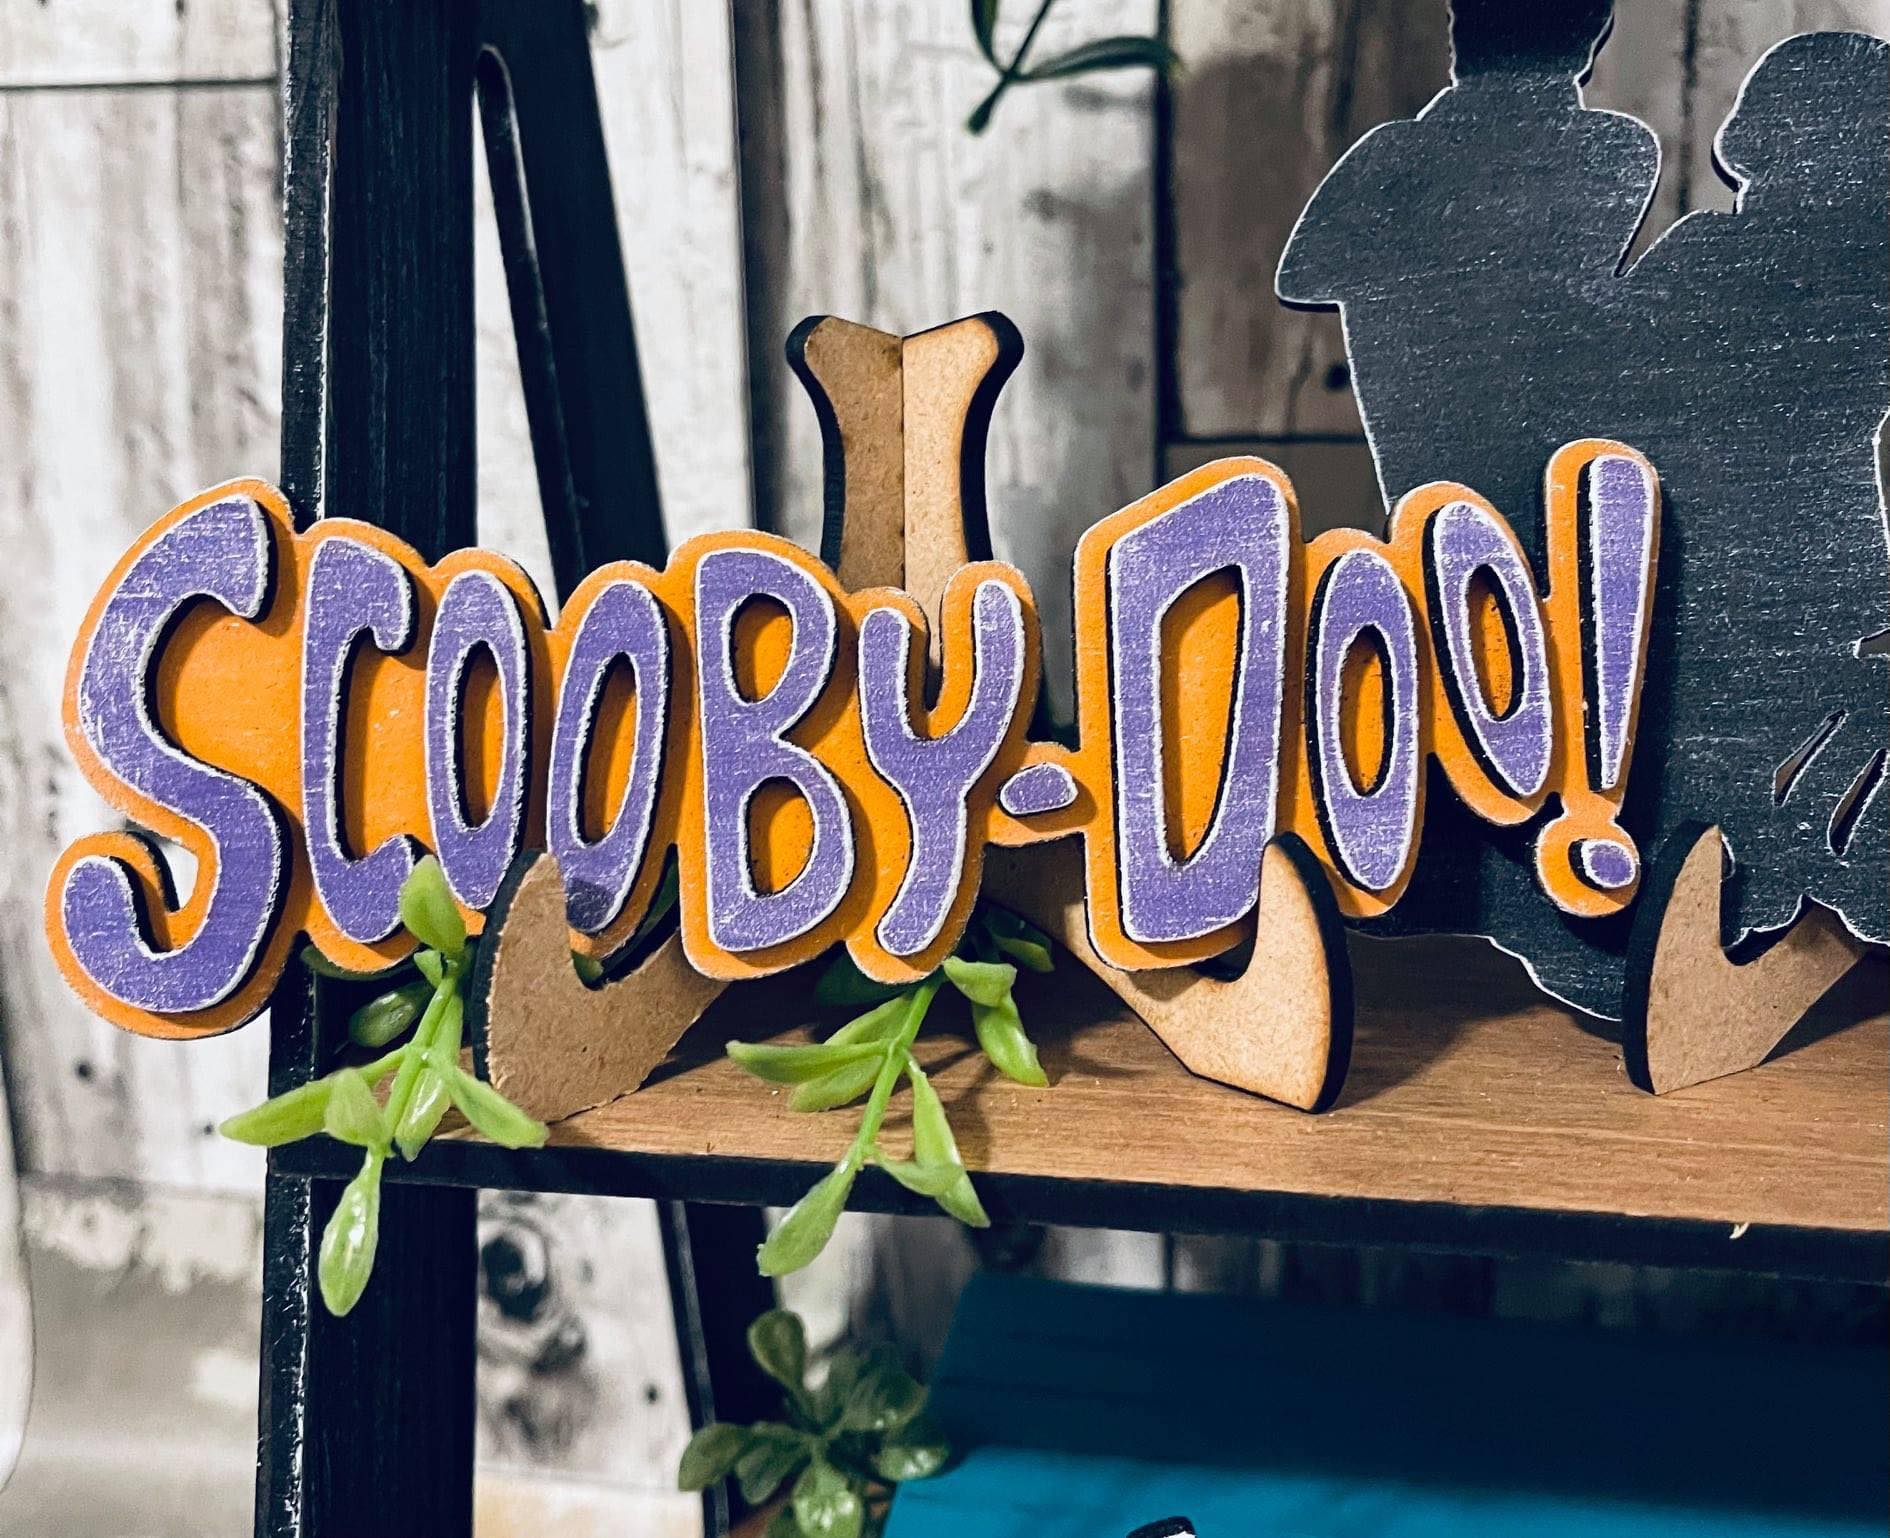 3D Tiered Tray Decor - Scooby Doo